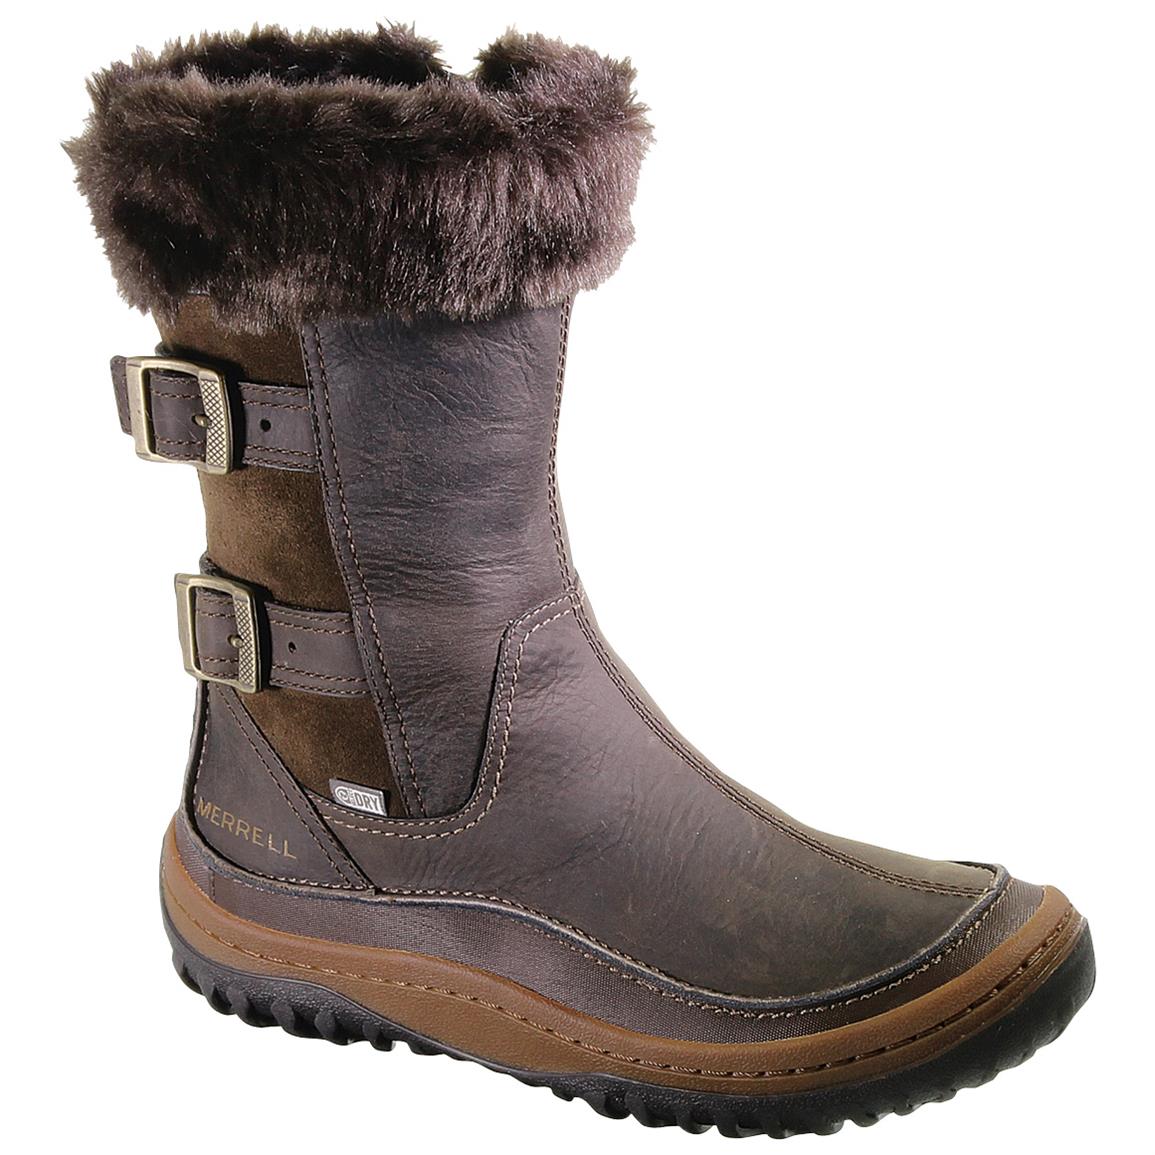 Women's Merrell Decora Chant Waterproof Boots 617472, Winter & Snow